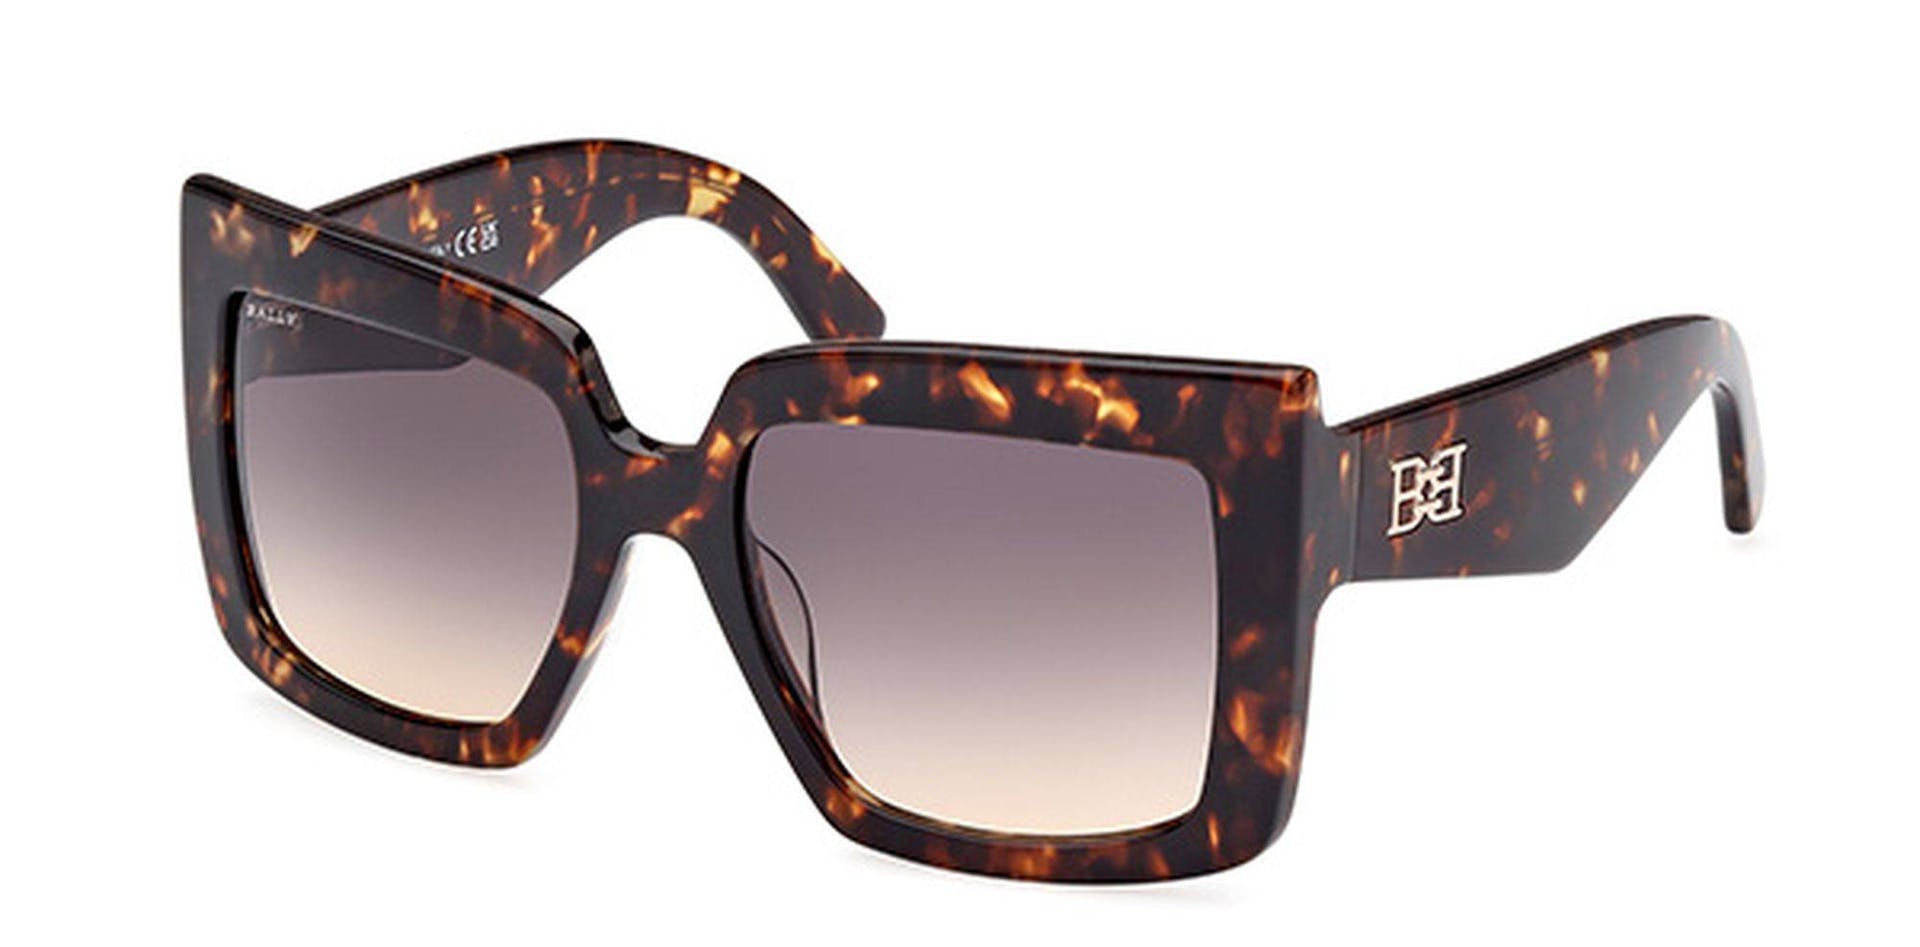 Carla Square Oversized Sunglasses In Tortoiseshell Plastic - Women's - Bally - 03